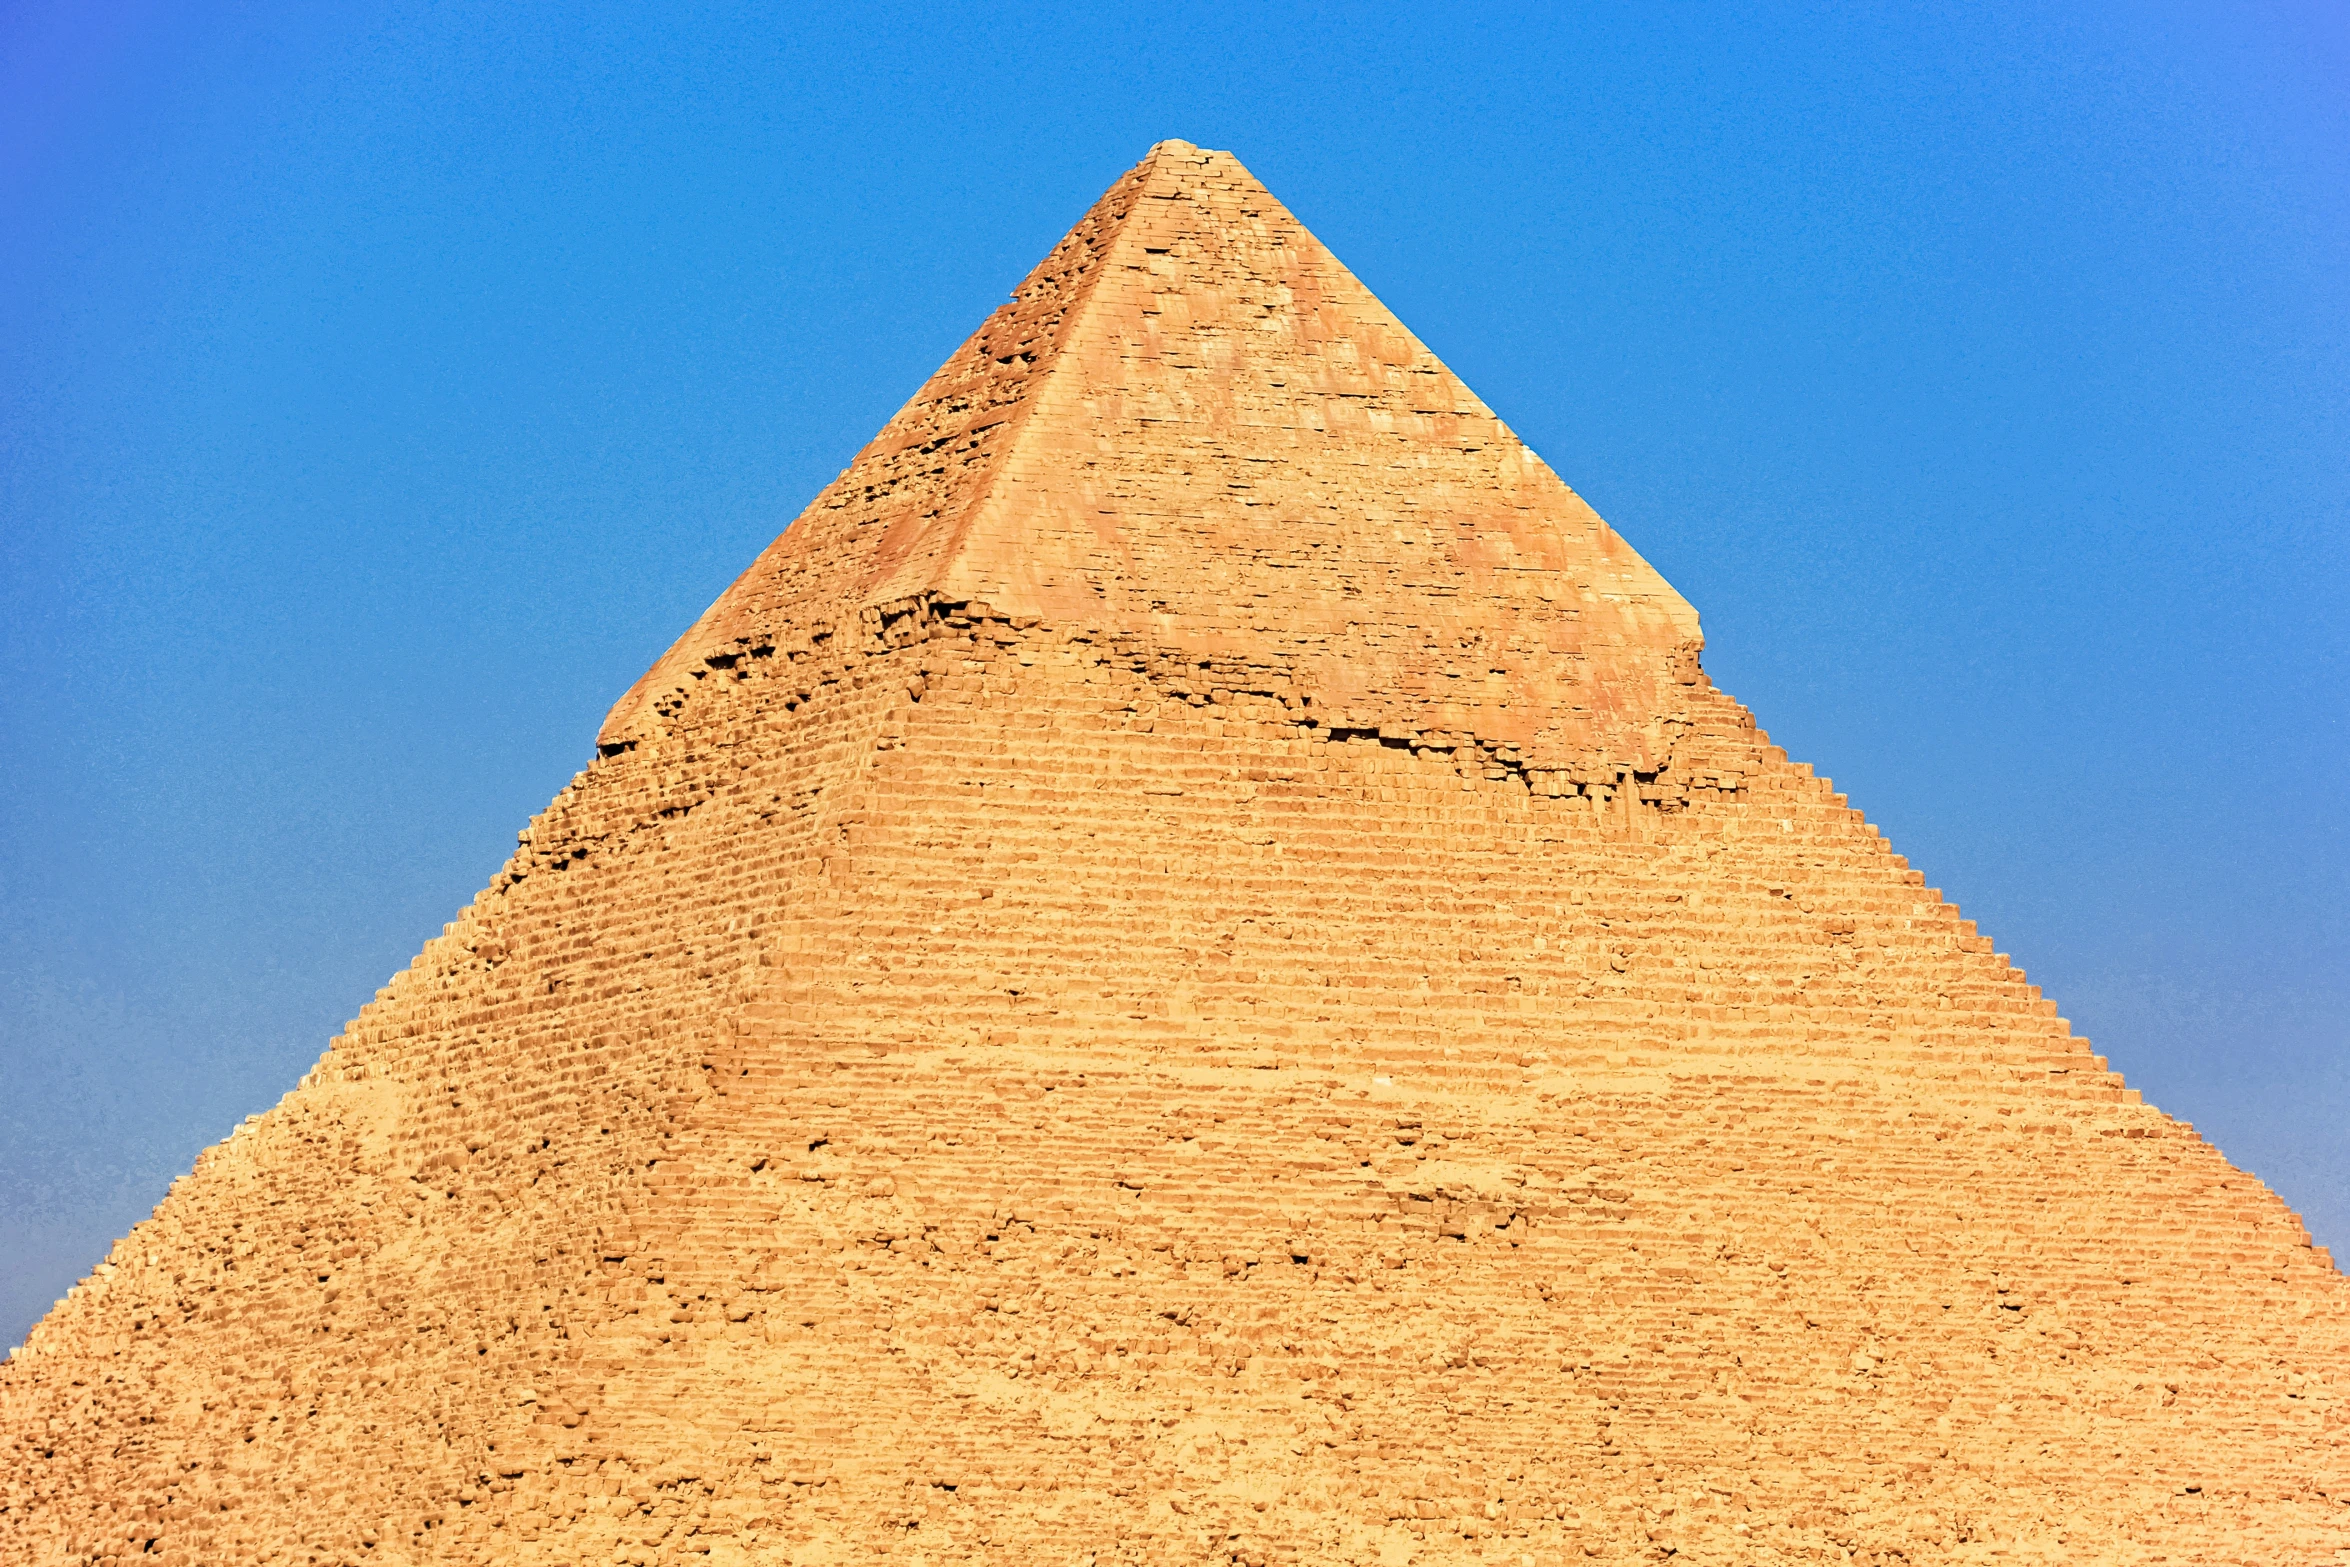 the bottom of a pyramid has sand and bricks